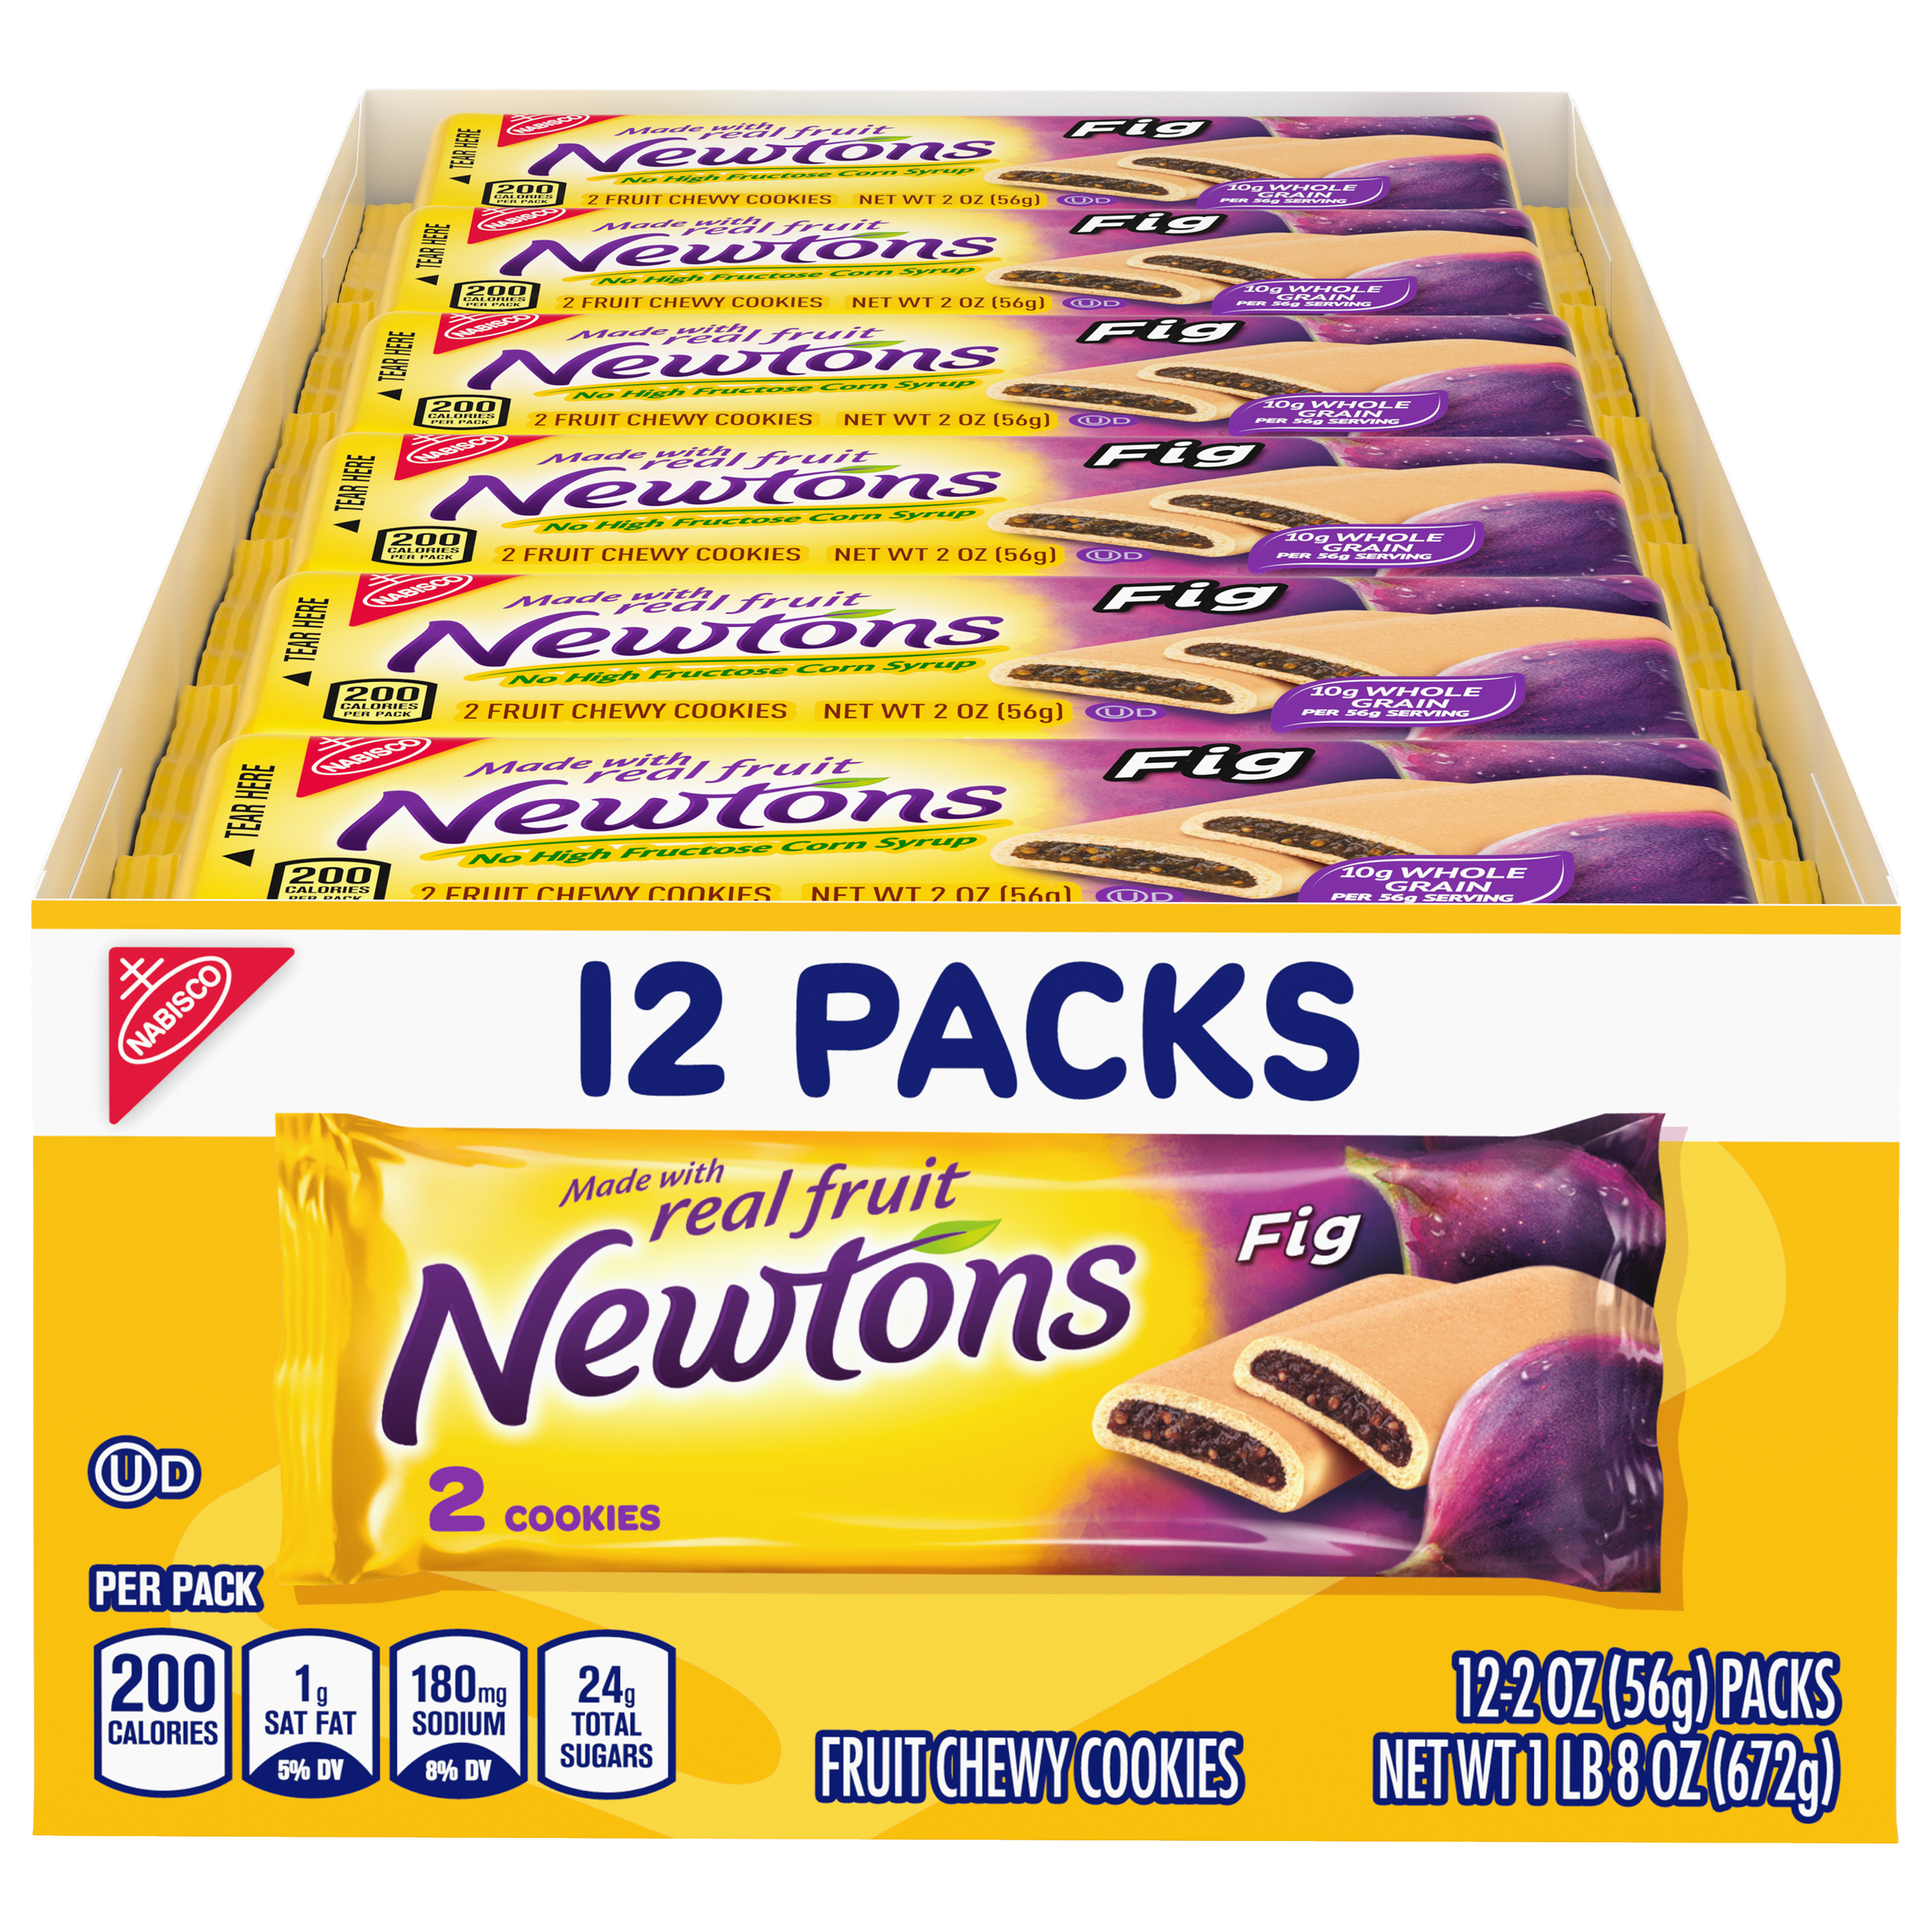 Newtons Soft & Fruit Chewy Fig Cookies, 12 Snack Packs (2 Cookies Per Pack)